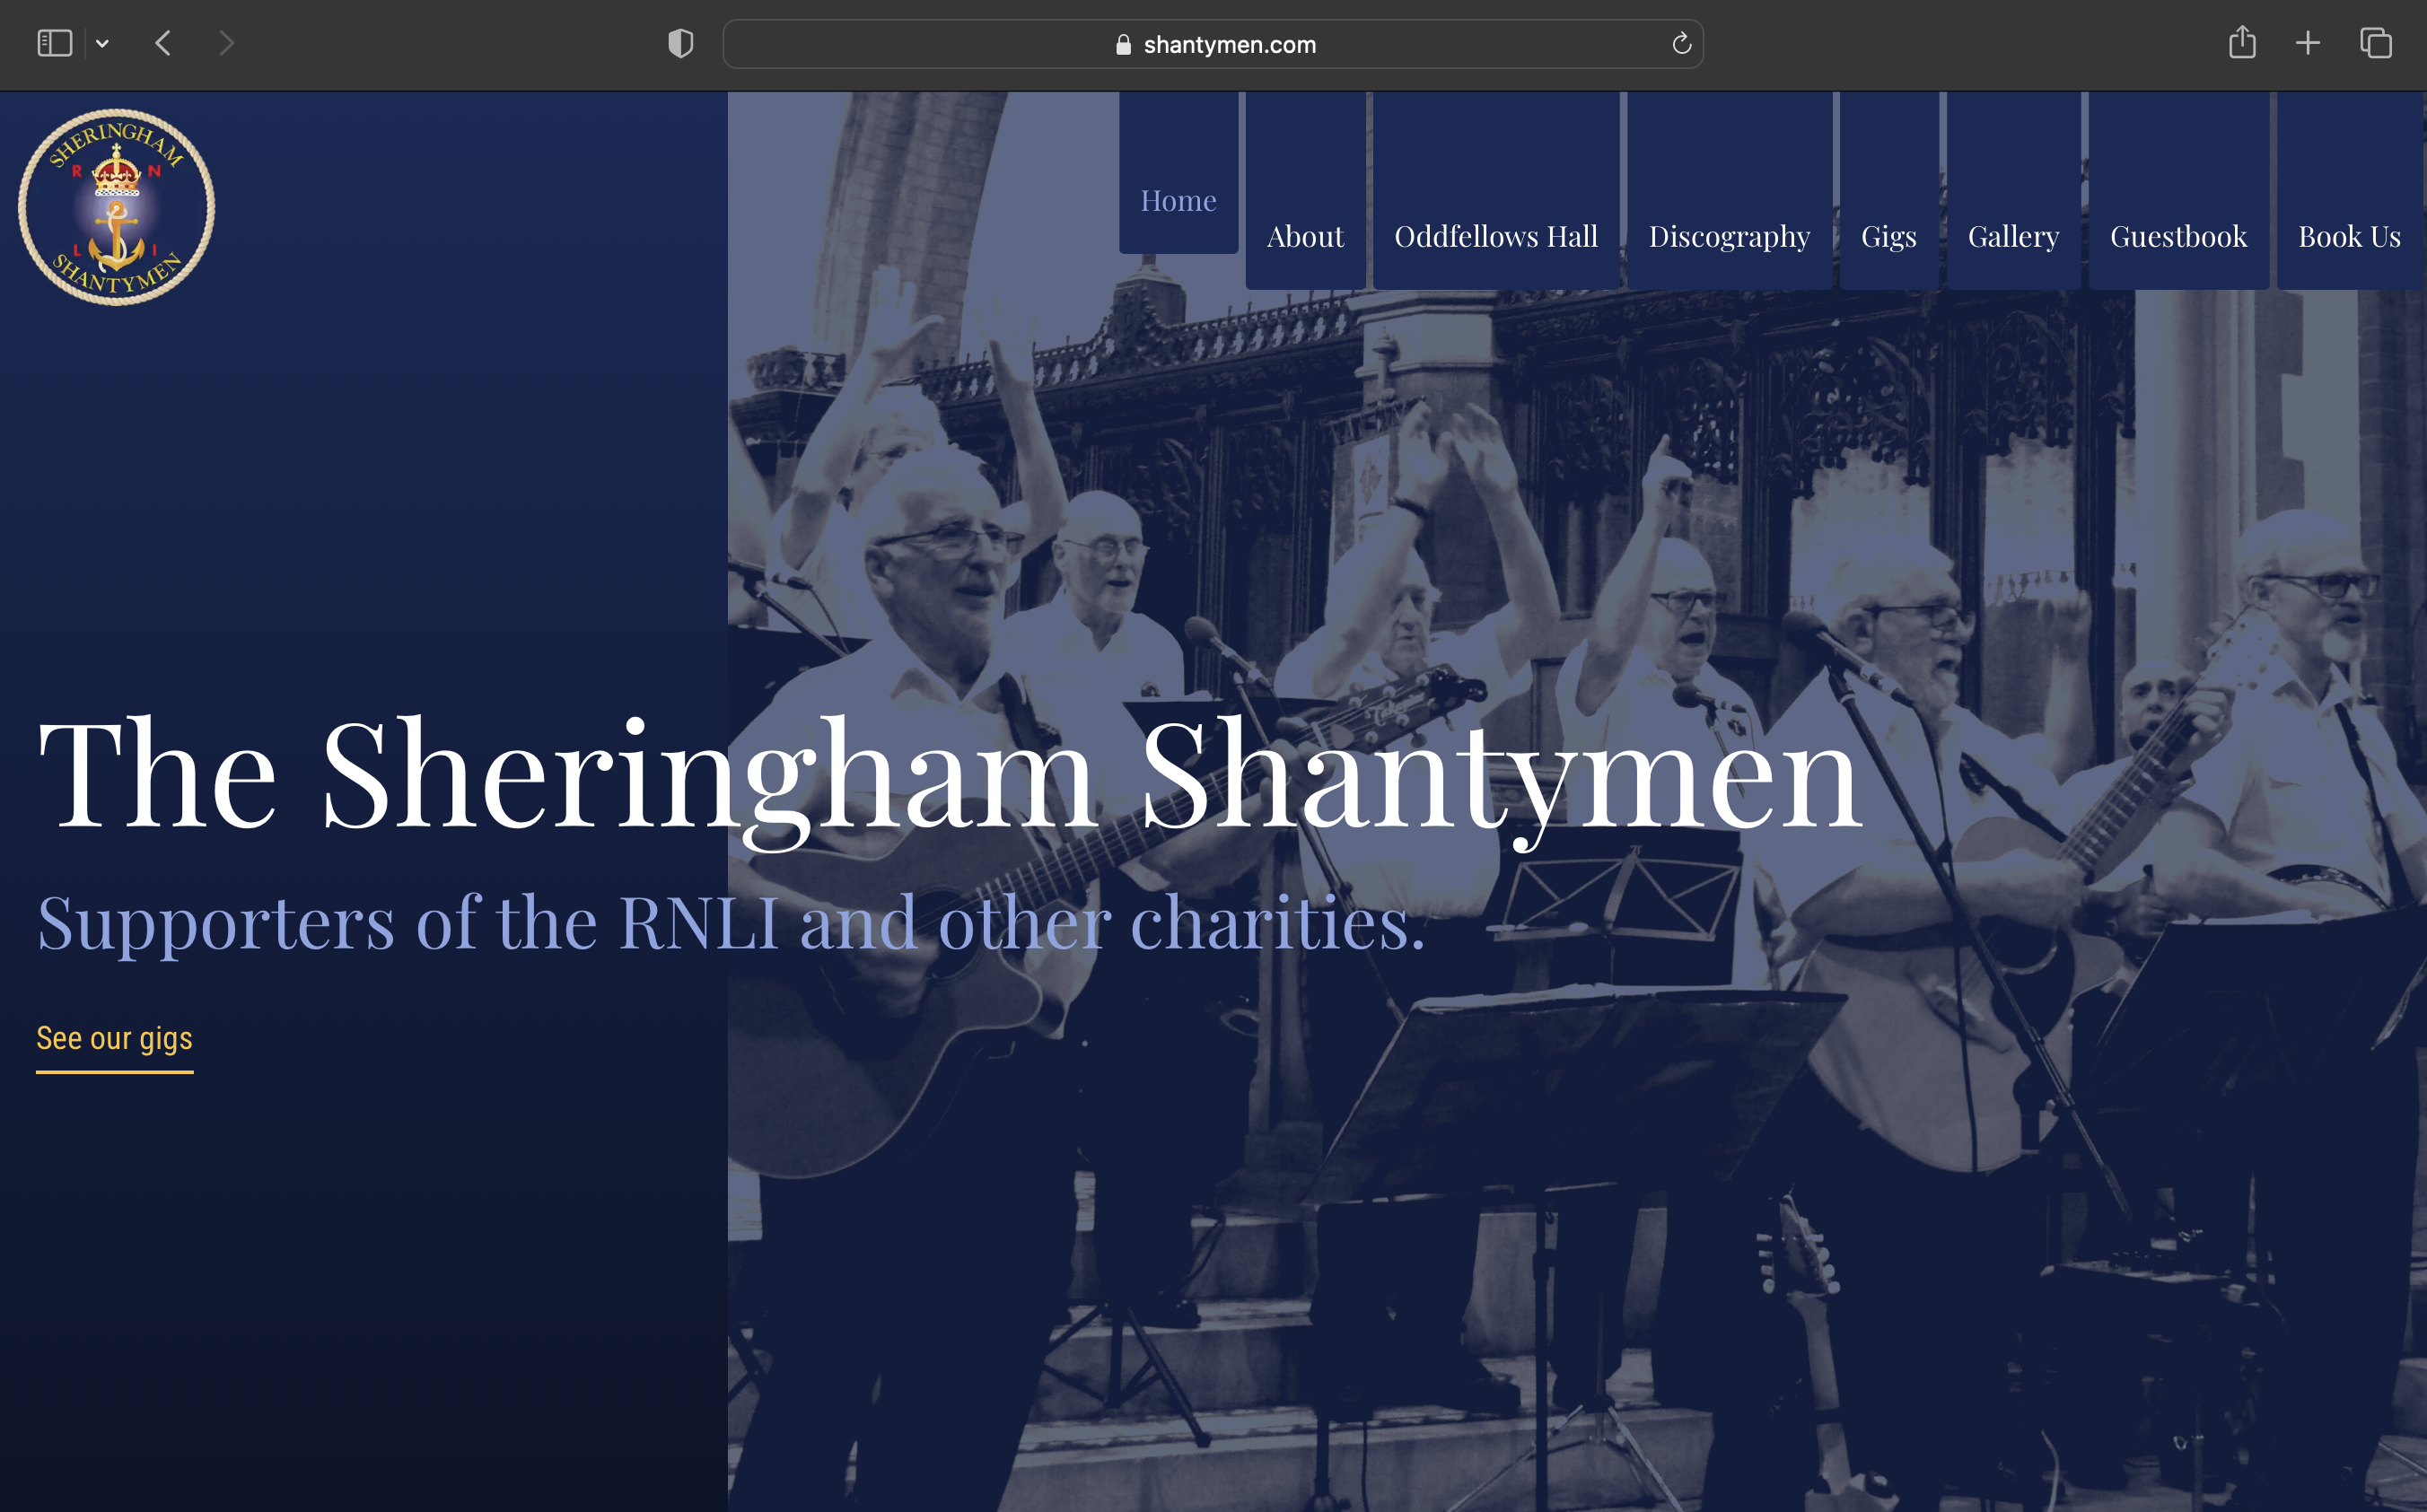 Shantymen website screenshot